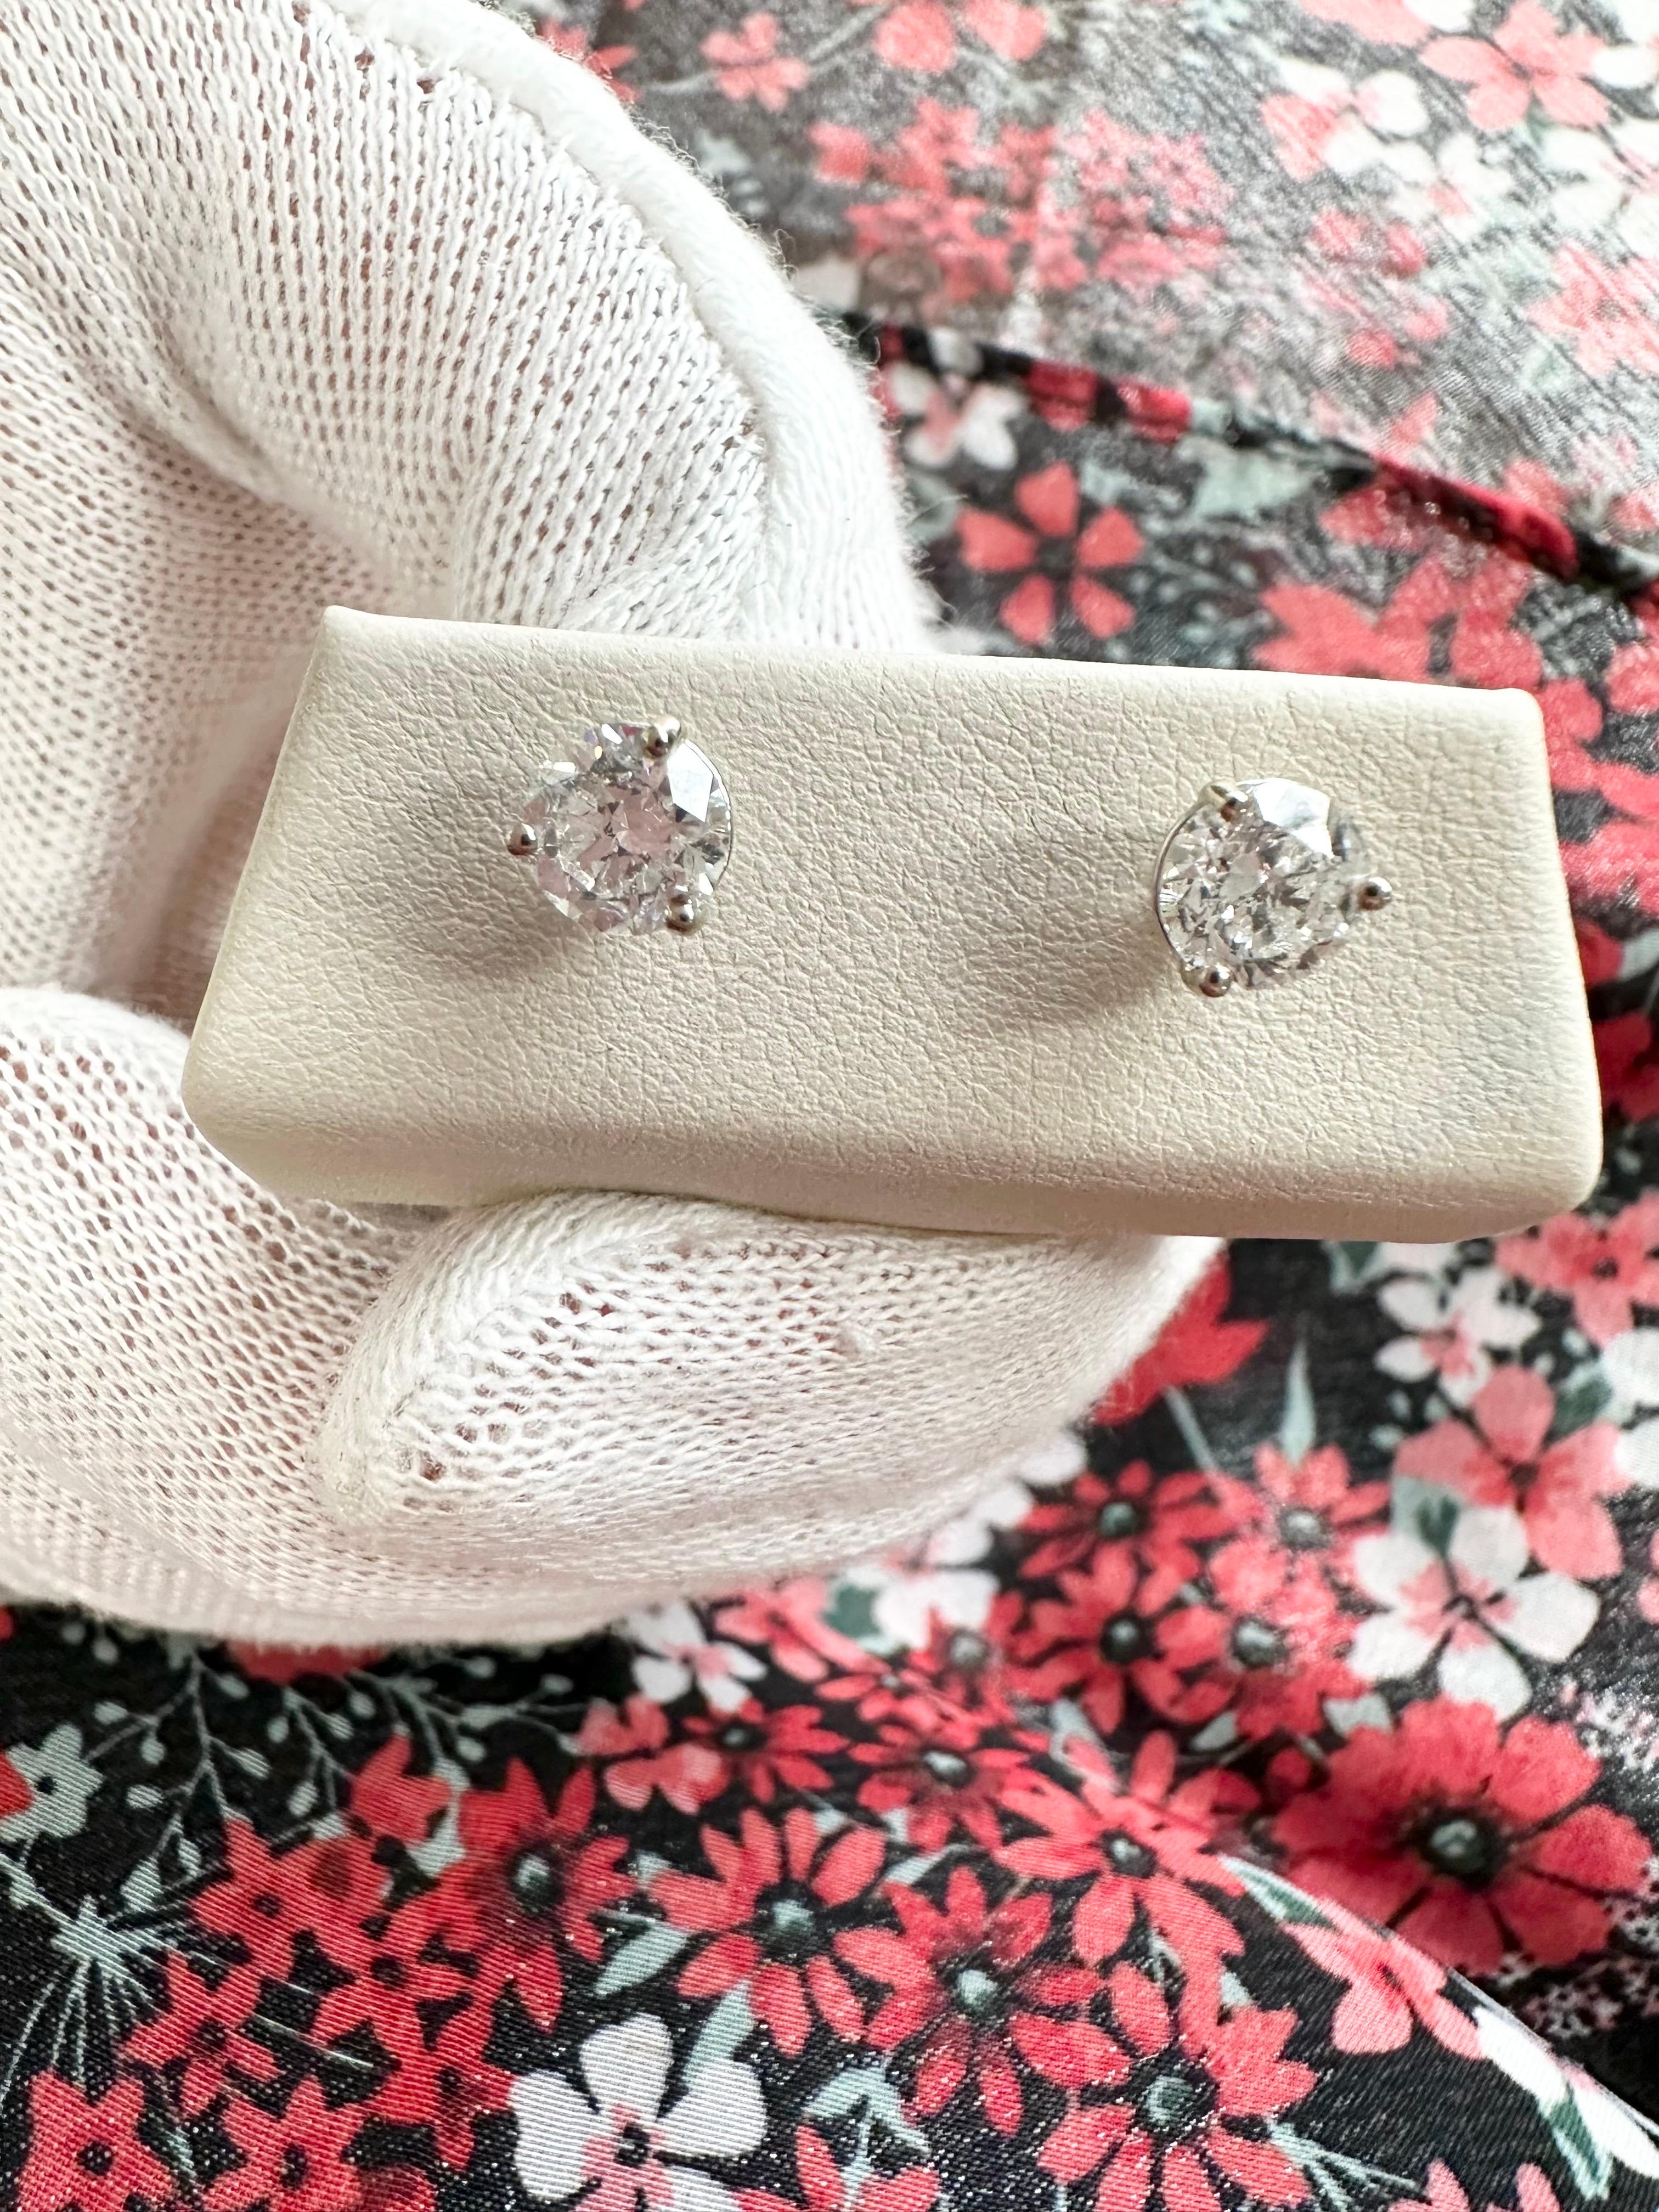 1.98ct diamond stud earrings 14KT white gold diamond studs For Sale 2